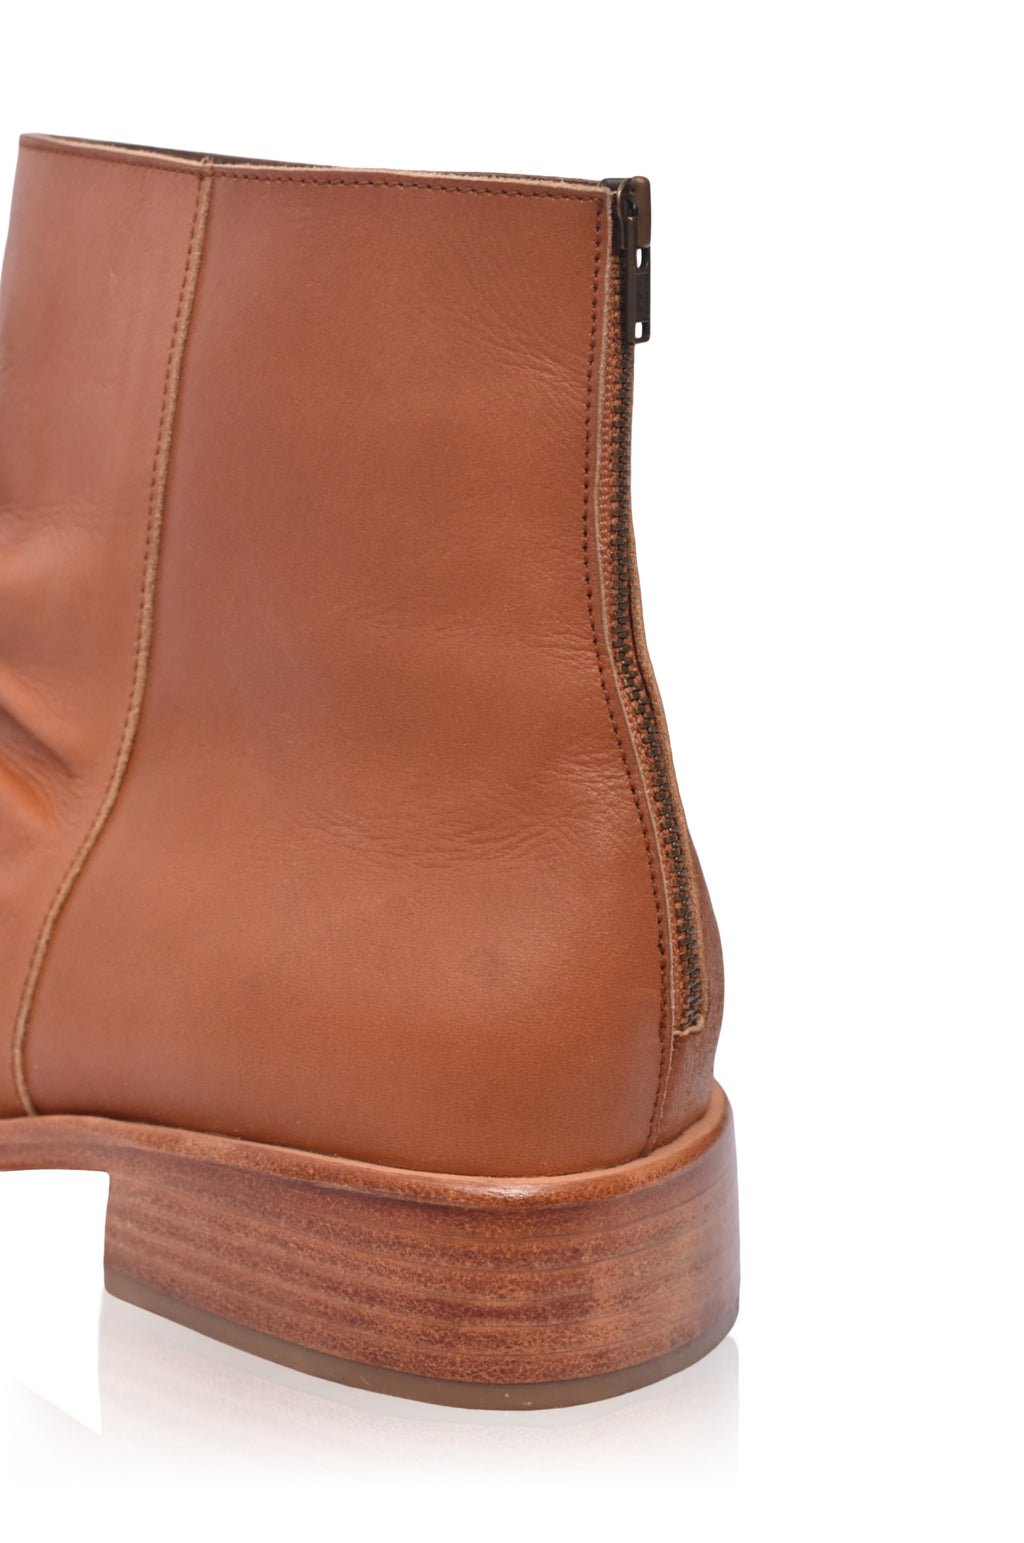 Moondream Chelsea Leather Boots (*Sz. 9)